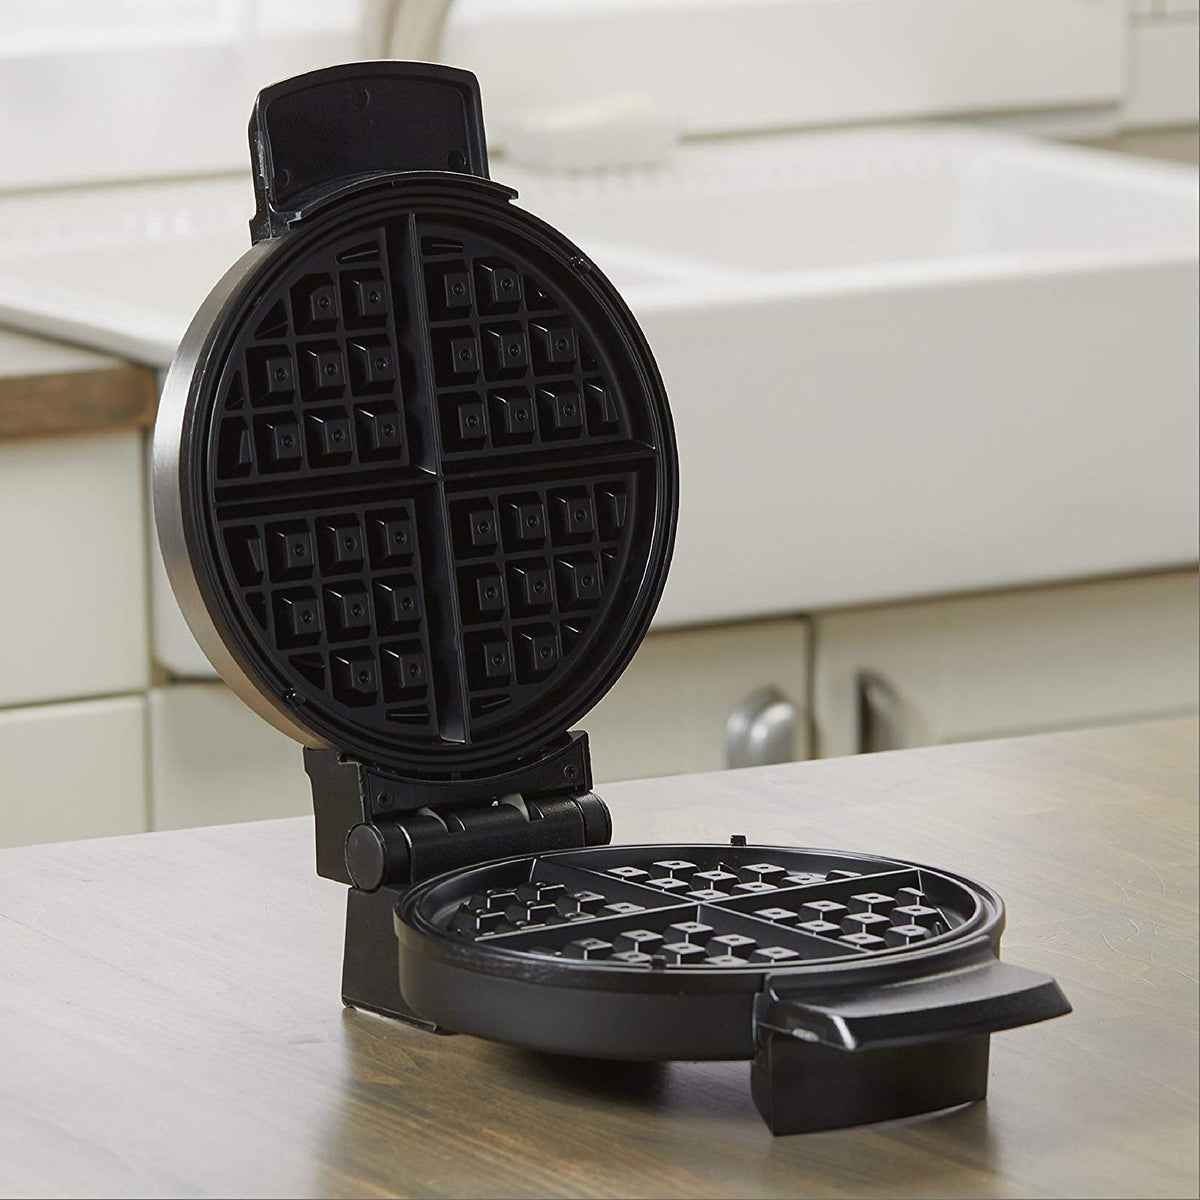 Black & Decker WMB505 Non-Stick Belgian Waffle Maker, Brushed Chrome